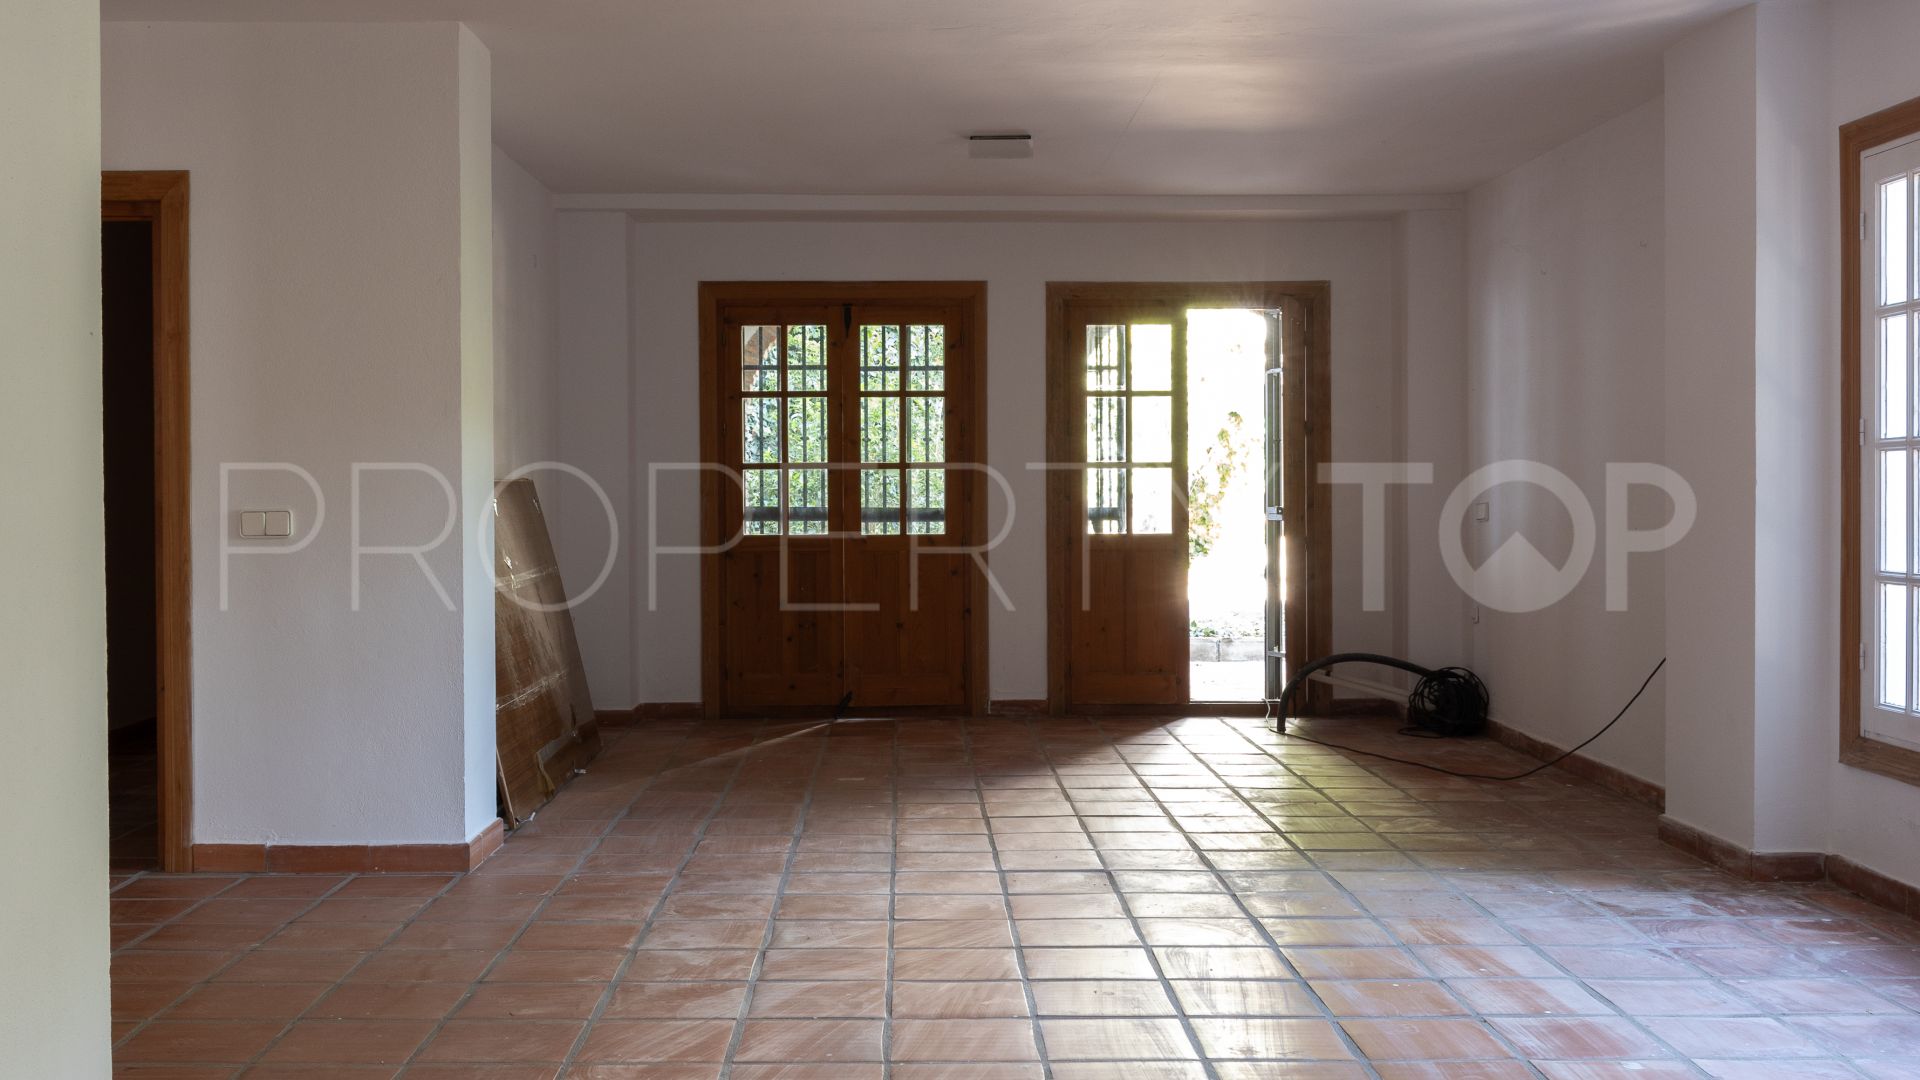 Villa for sale in Casarabonela with 9 bedrooms